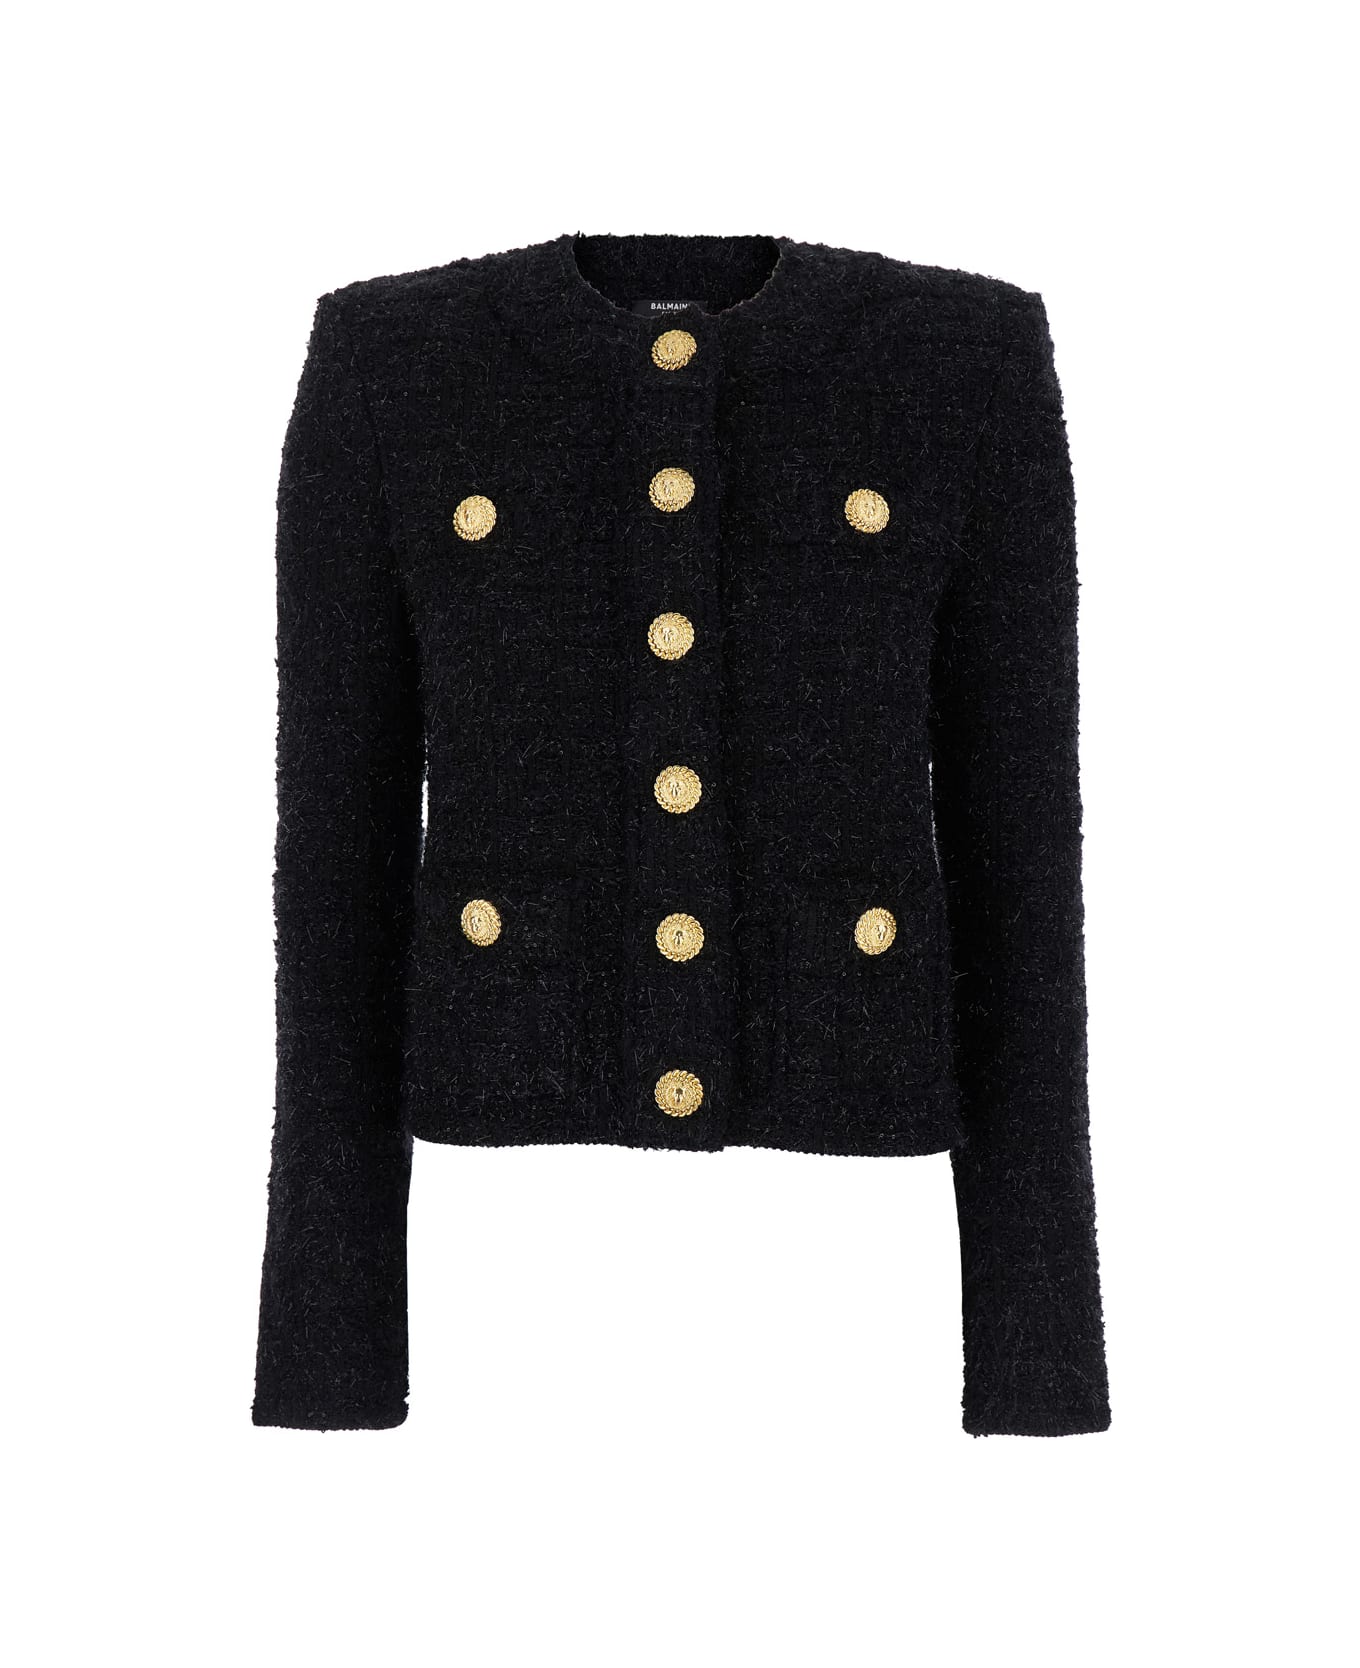 Balmain 'miami' Black Collarless Jacket With Jewel Buttons In Tweed Woman - Black カーディガン